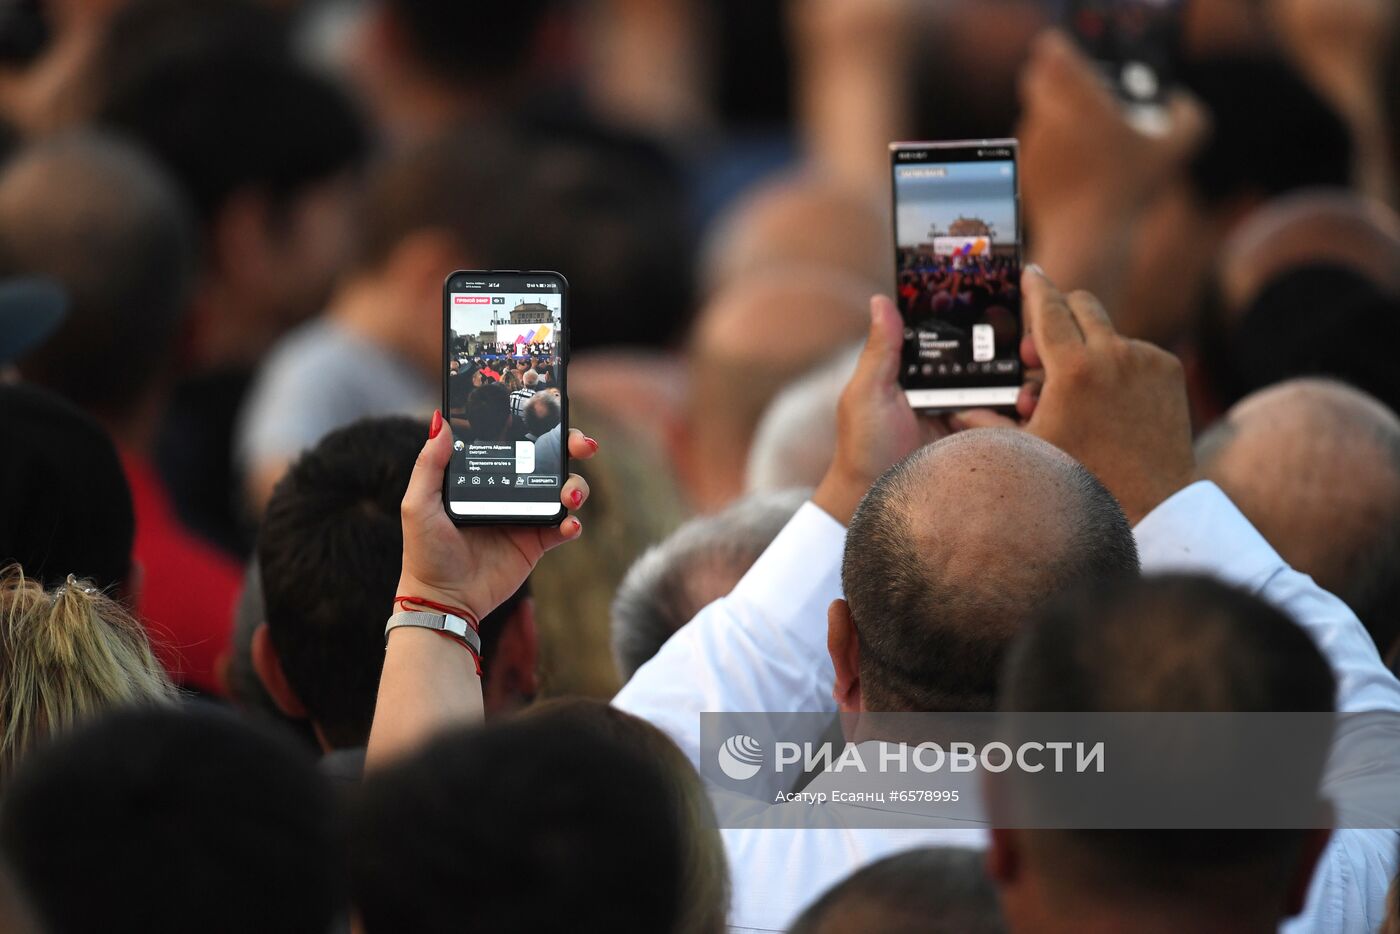 Митинг сторонников Н. Пашиняна в Ереване 